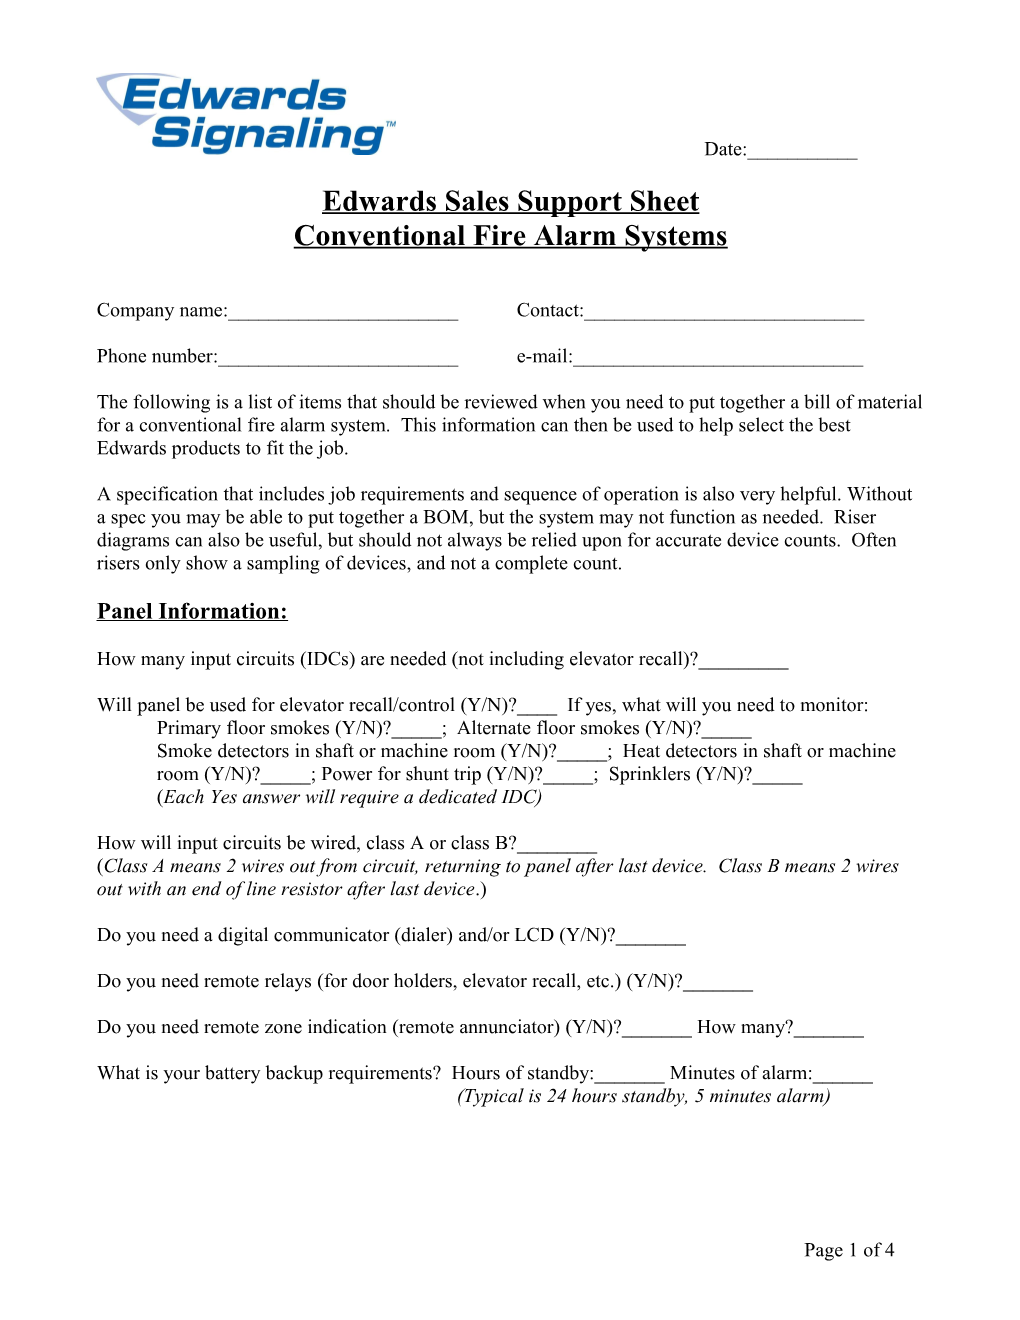 Edwards Sales Support Sheet